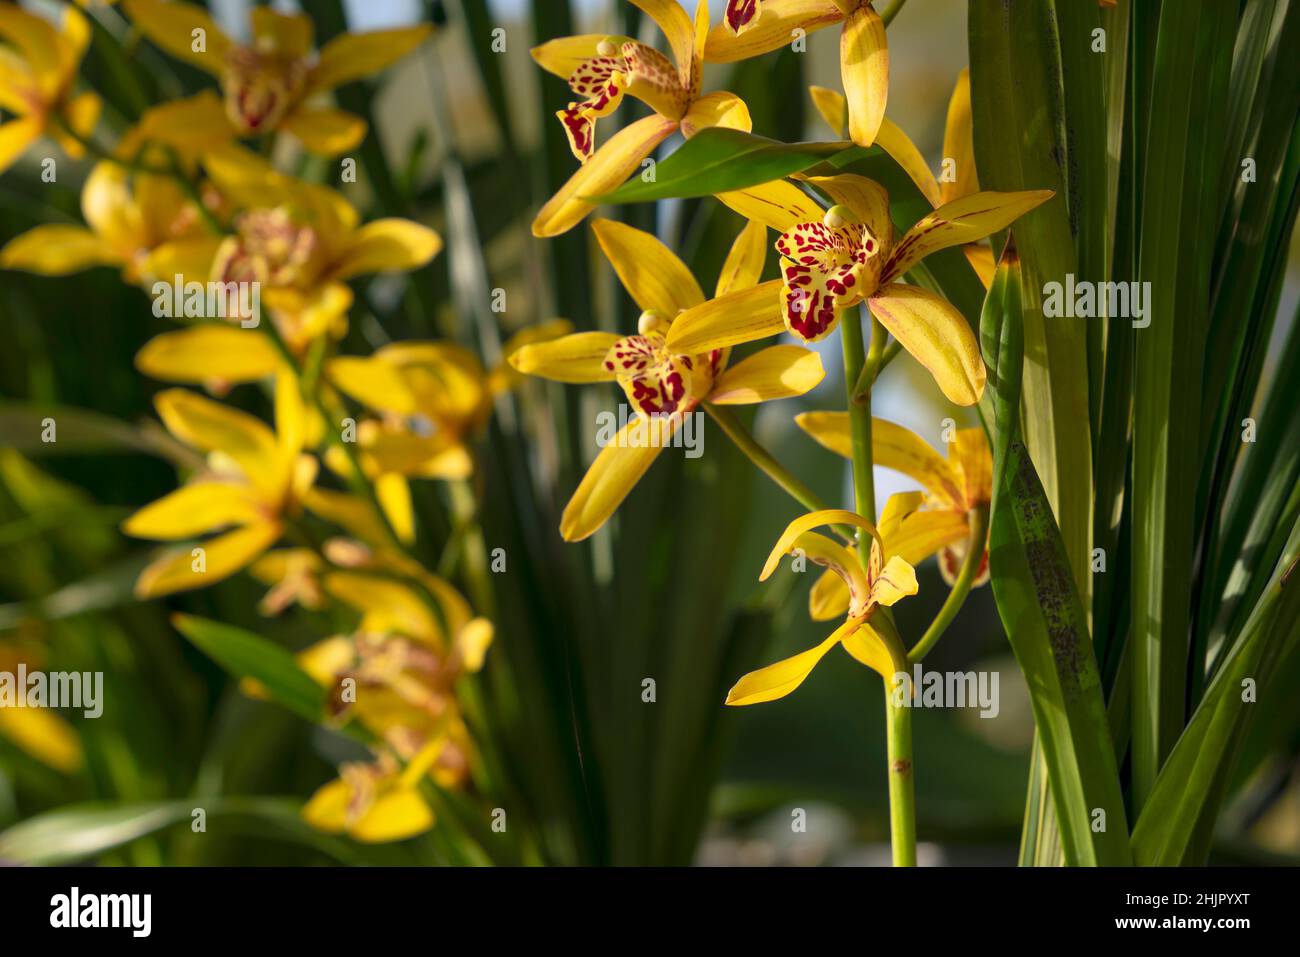 Orchid flower grow in tropical garden. Cymbidium hybrid Orchid flowering plant, close up, Cymbidium Gloden Vanguand. Stock Photo